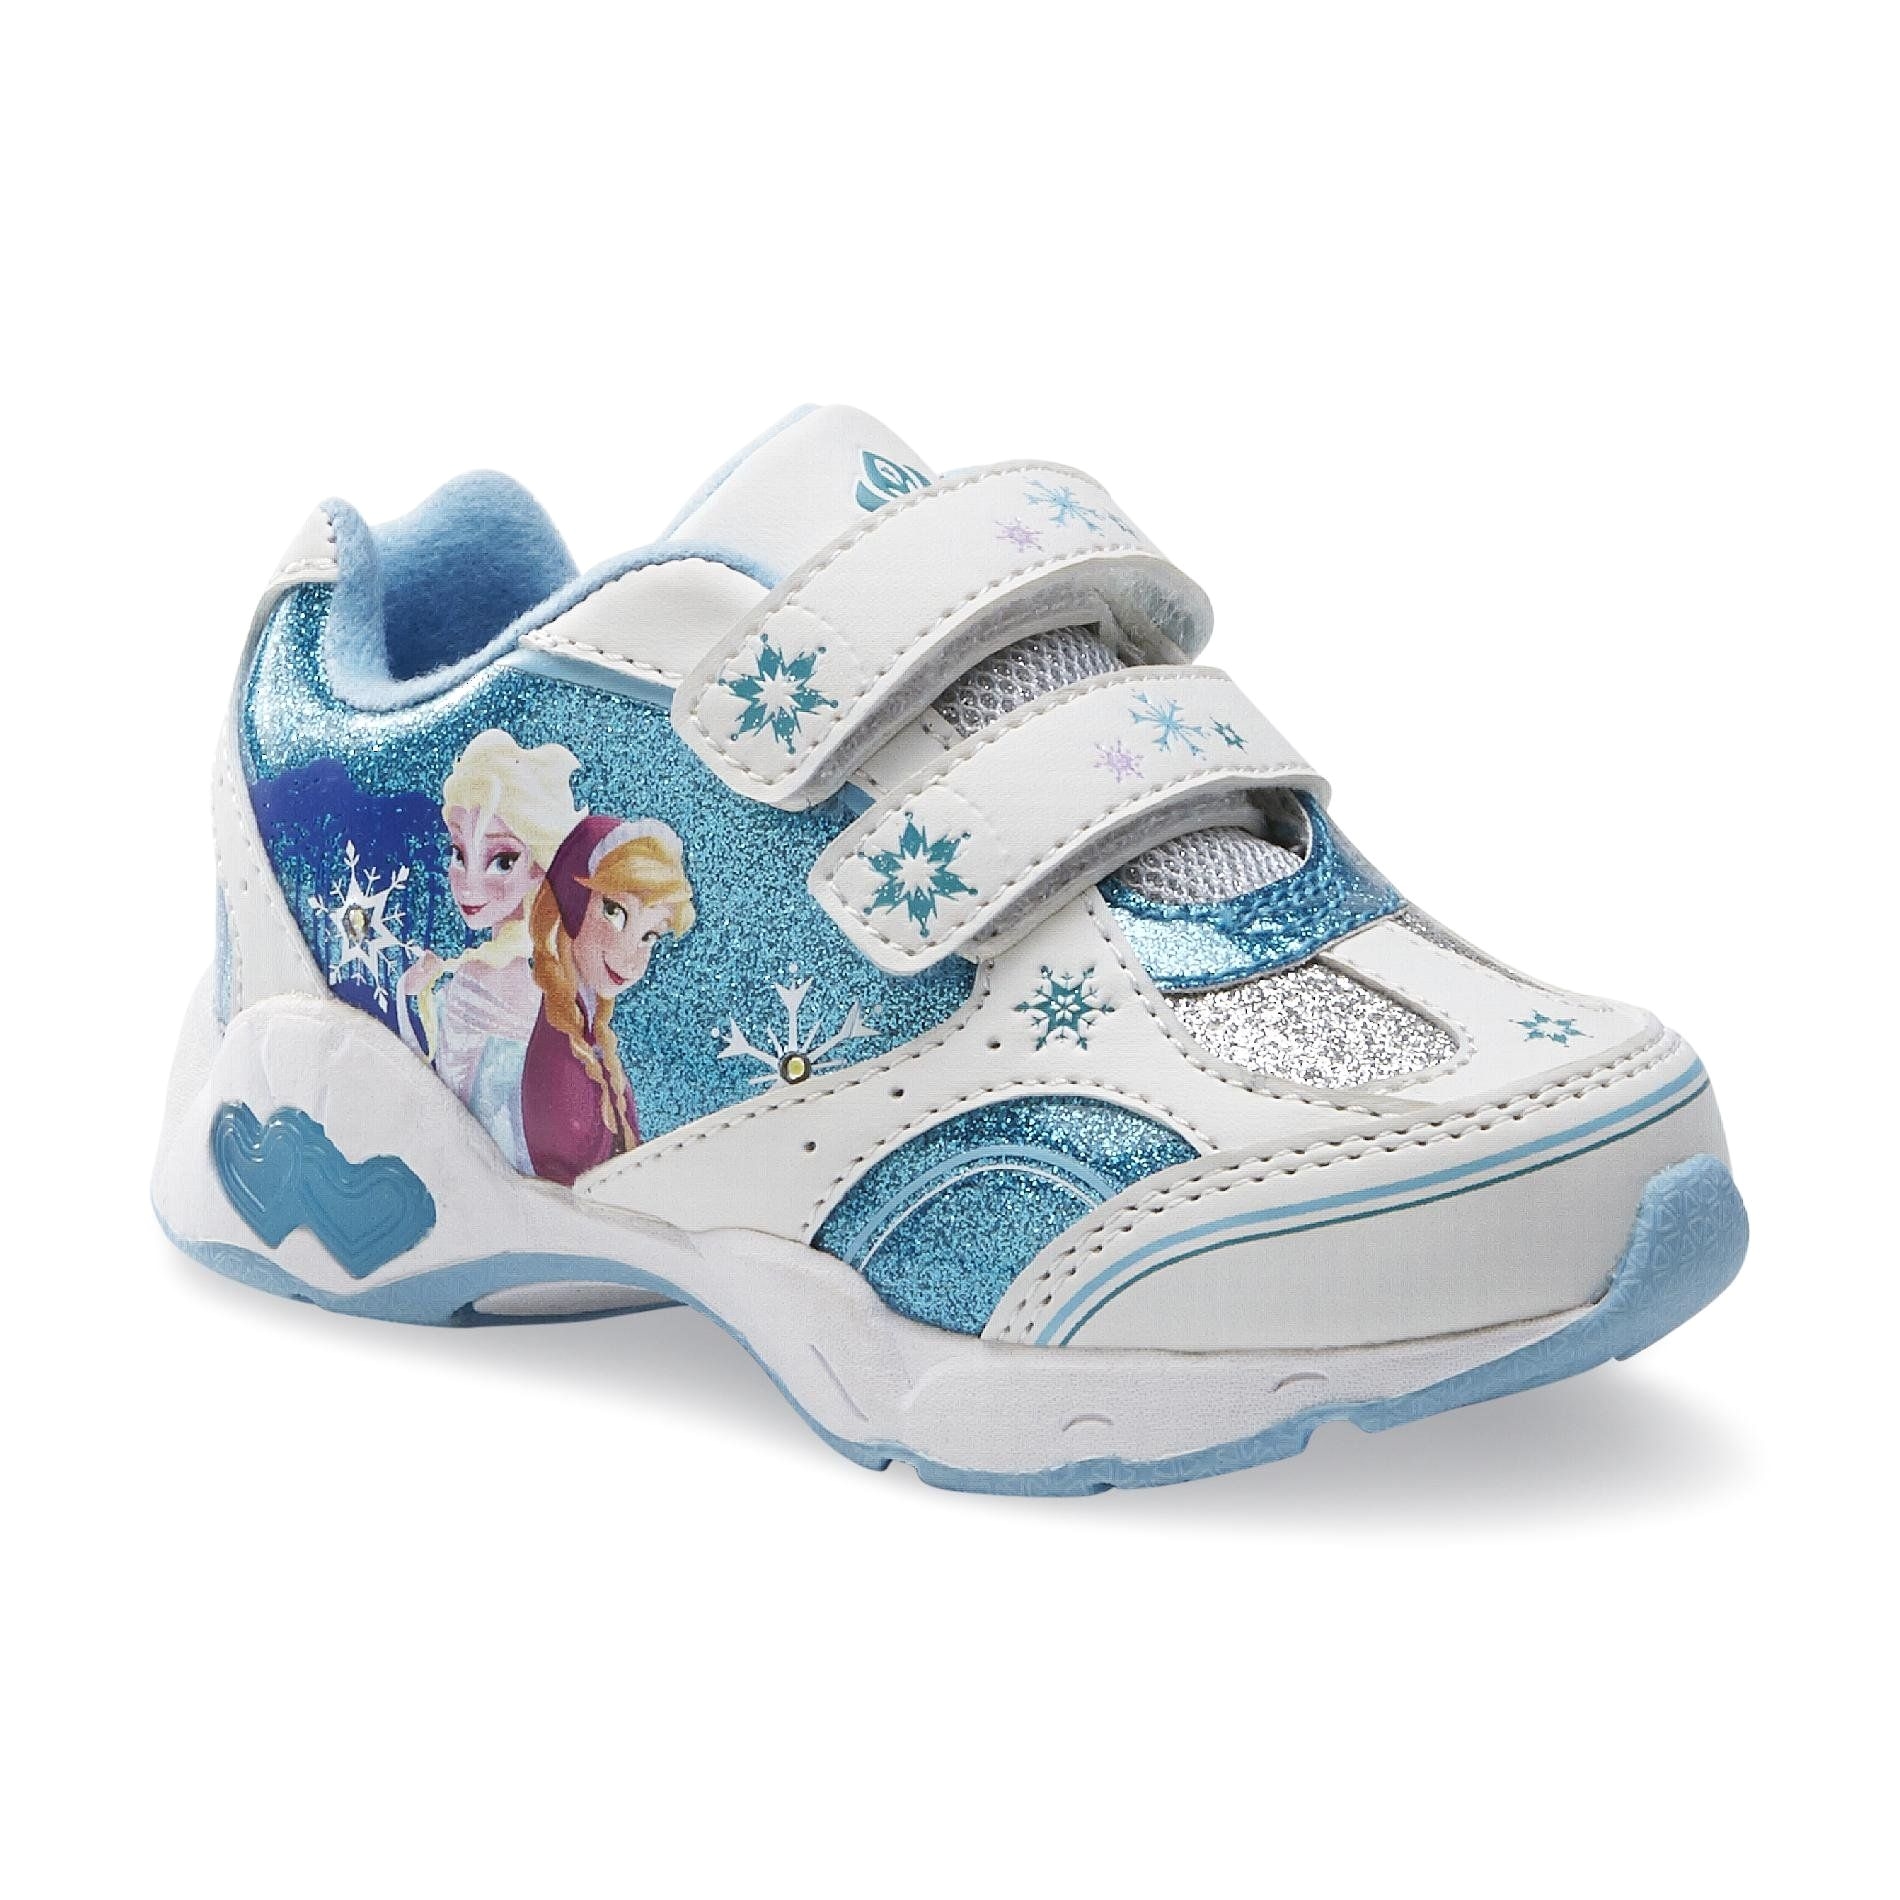 disney frozen toddler elsa anna sneakers light up lights athletic kids shoes blue white